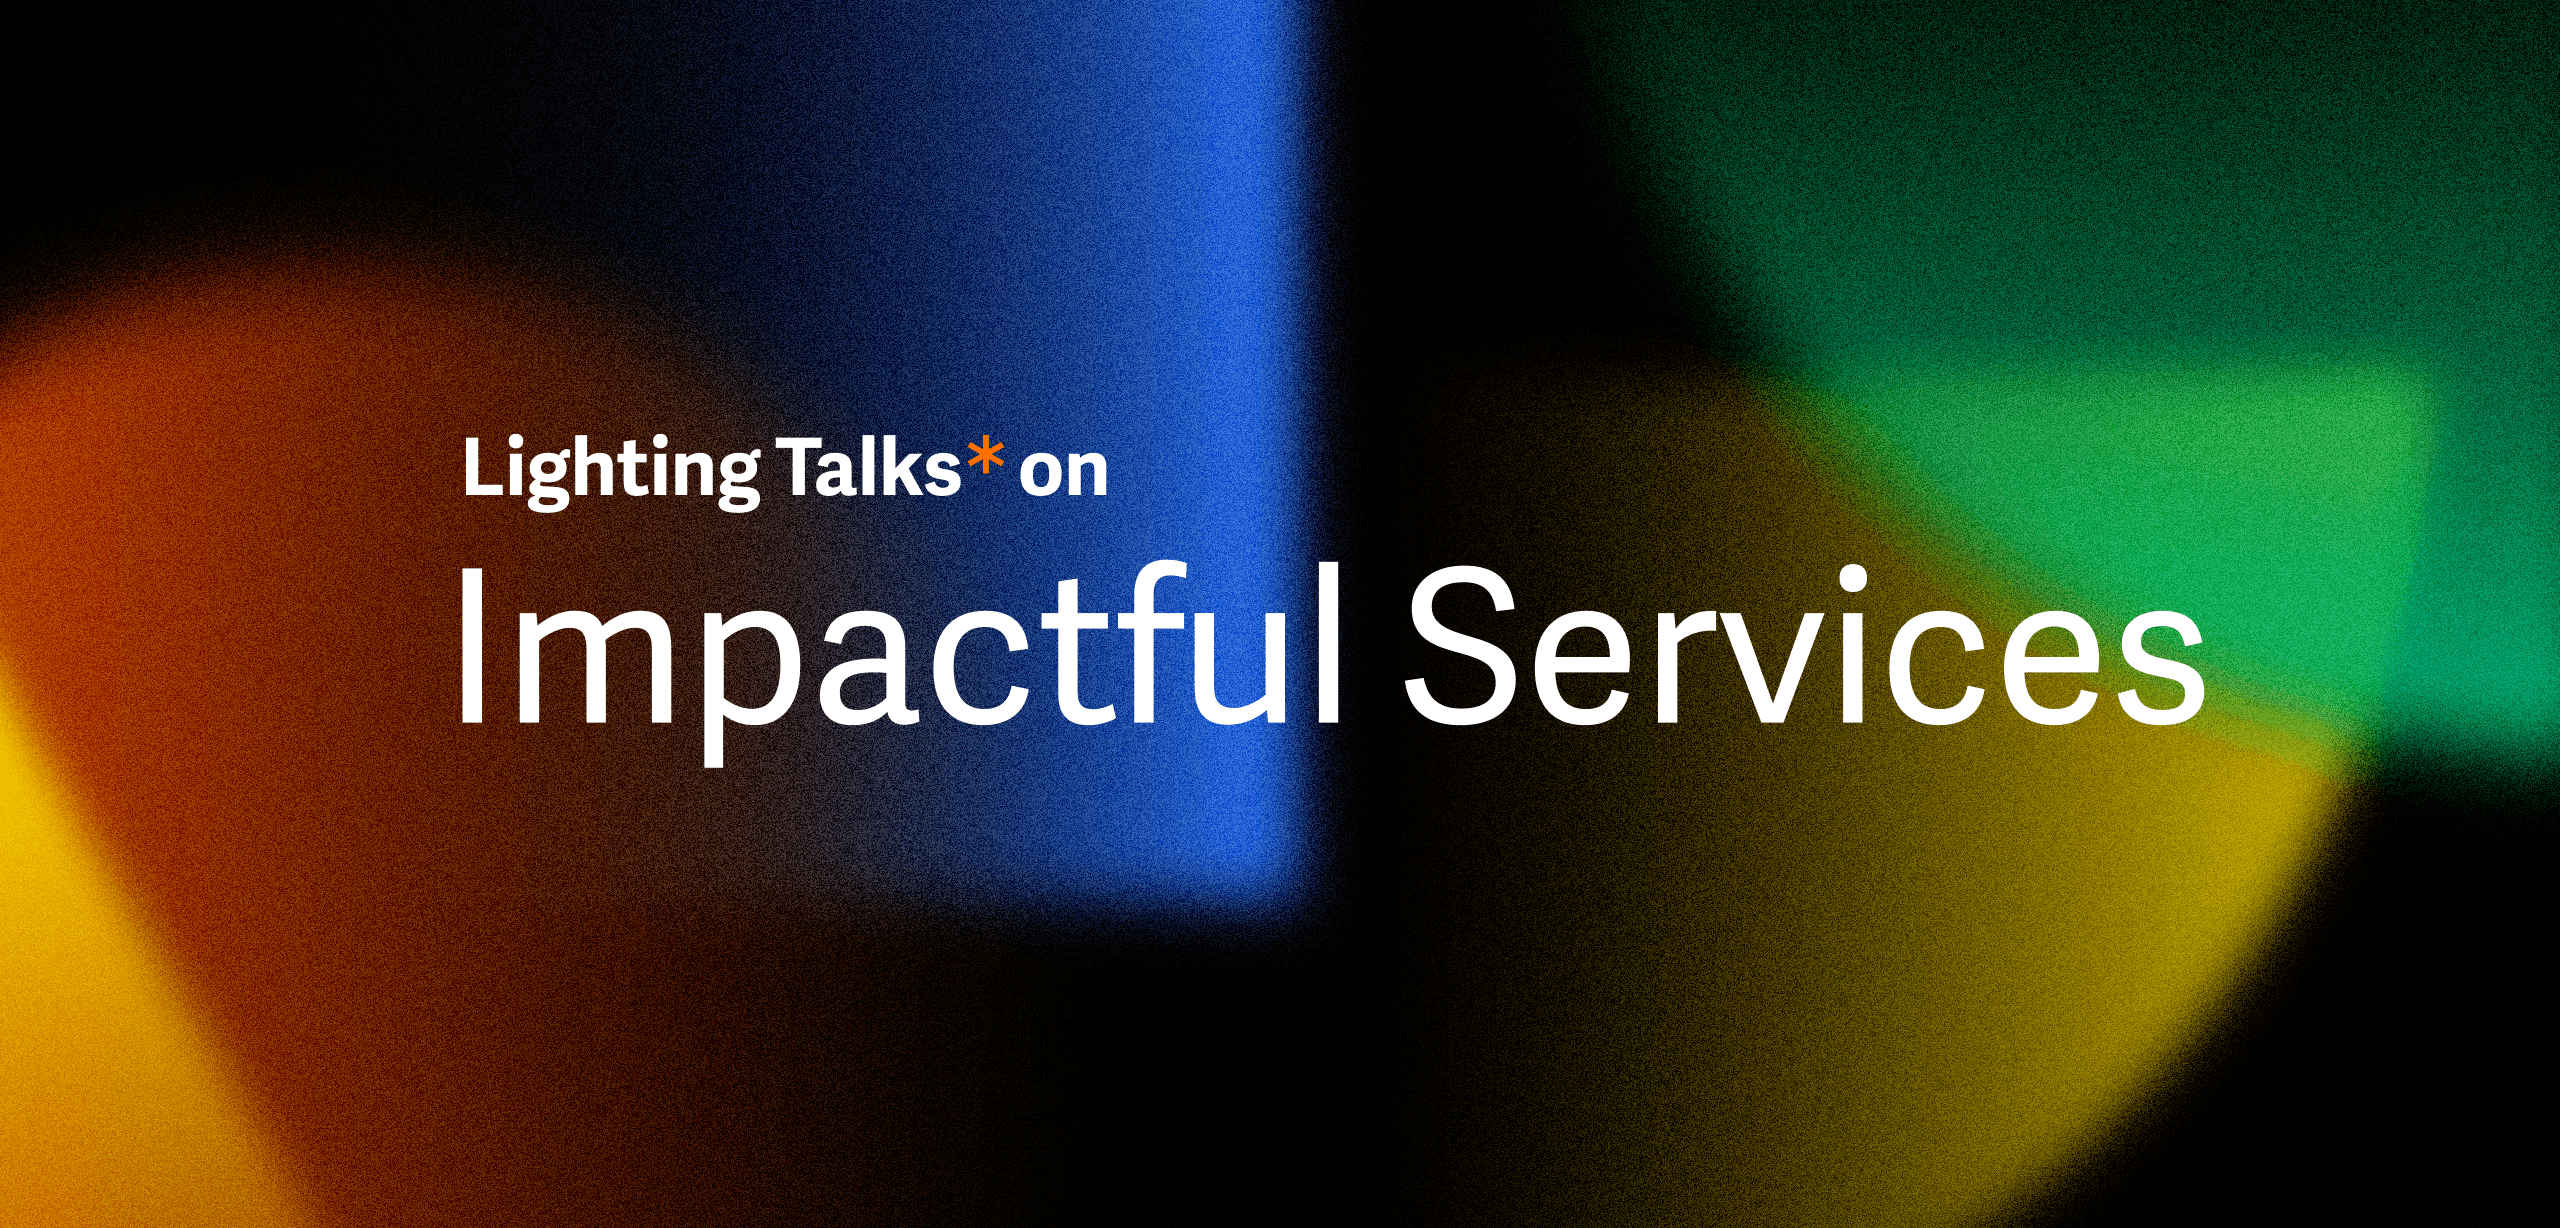 Lighting Talks* on Impactful Services